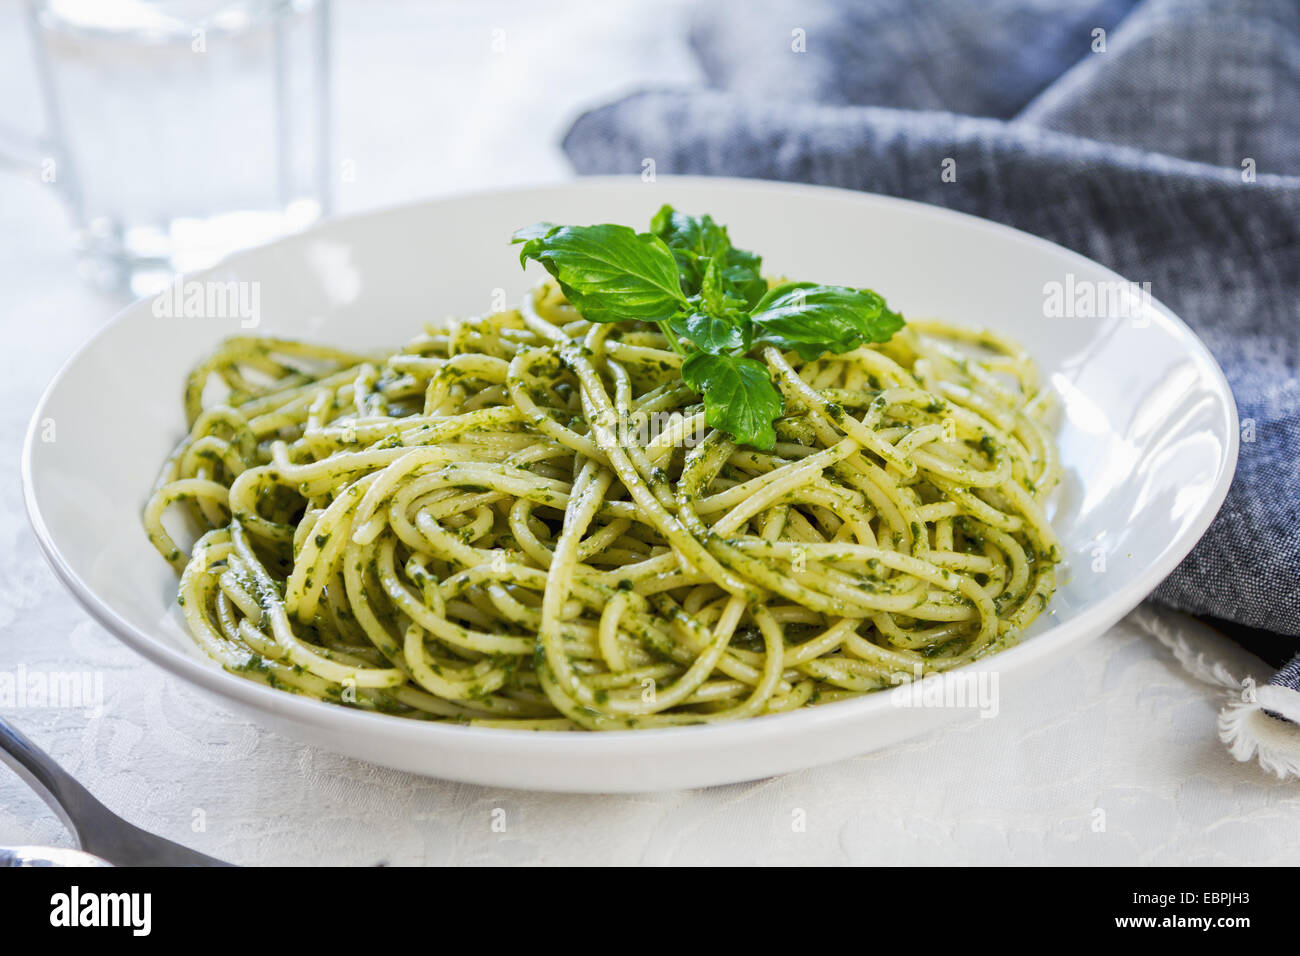 Spaghetti with homemade pesto sauce Stock Photo